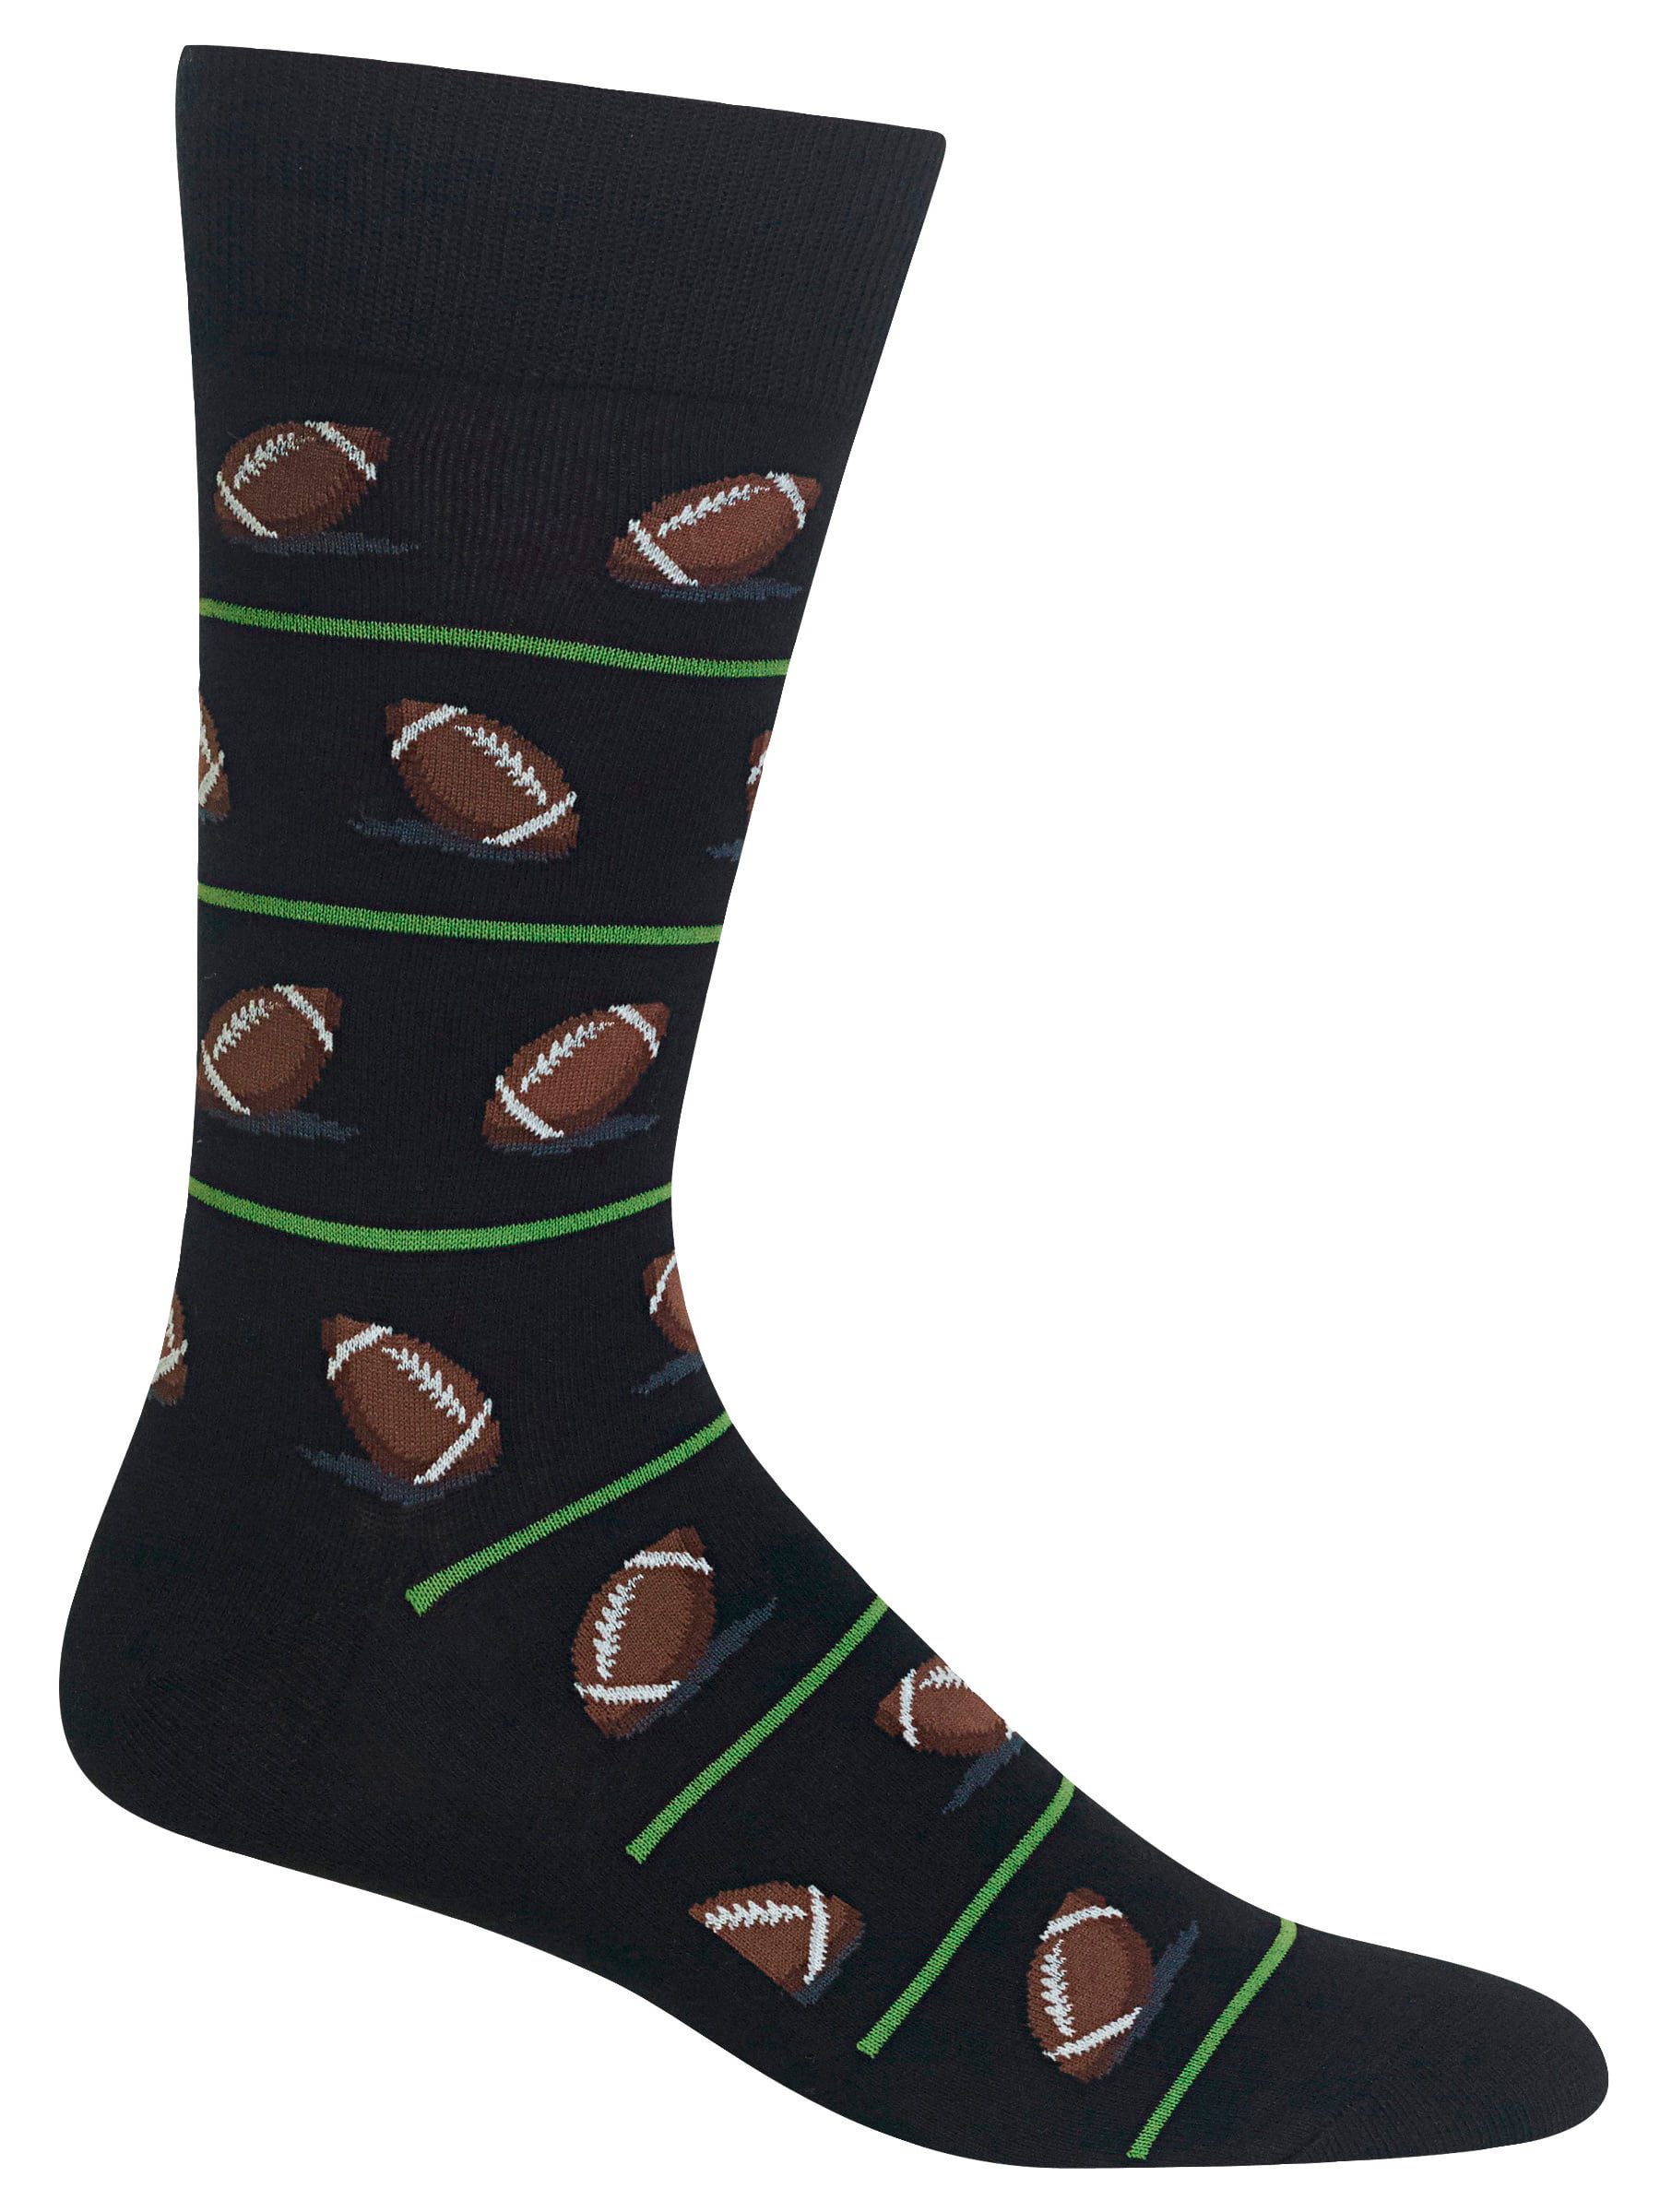 Football Novelty Socks for Men by Hot Sox - Black - Walmart.com